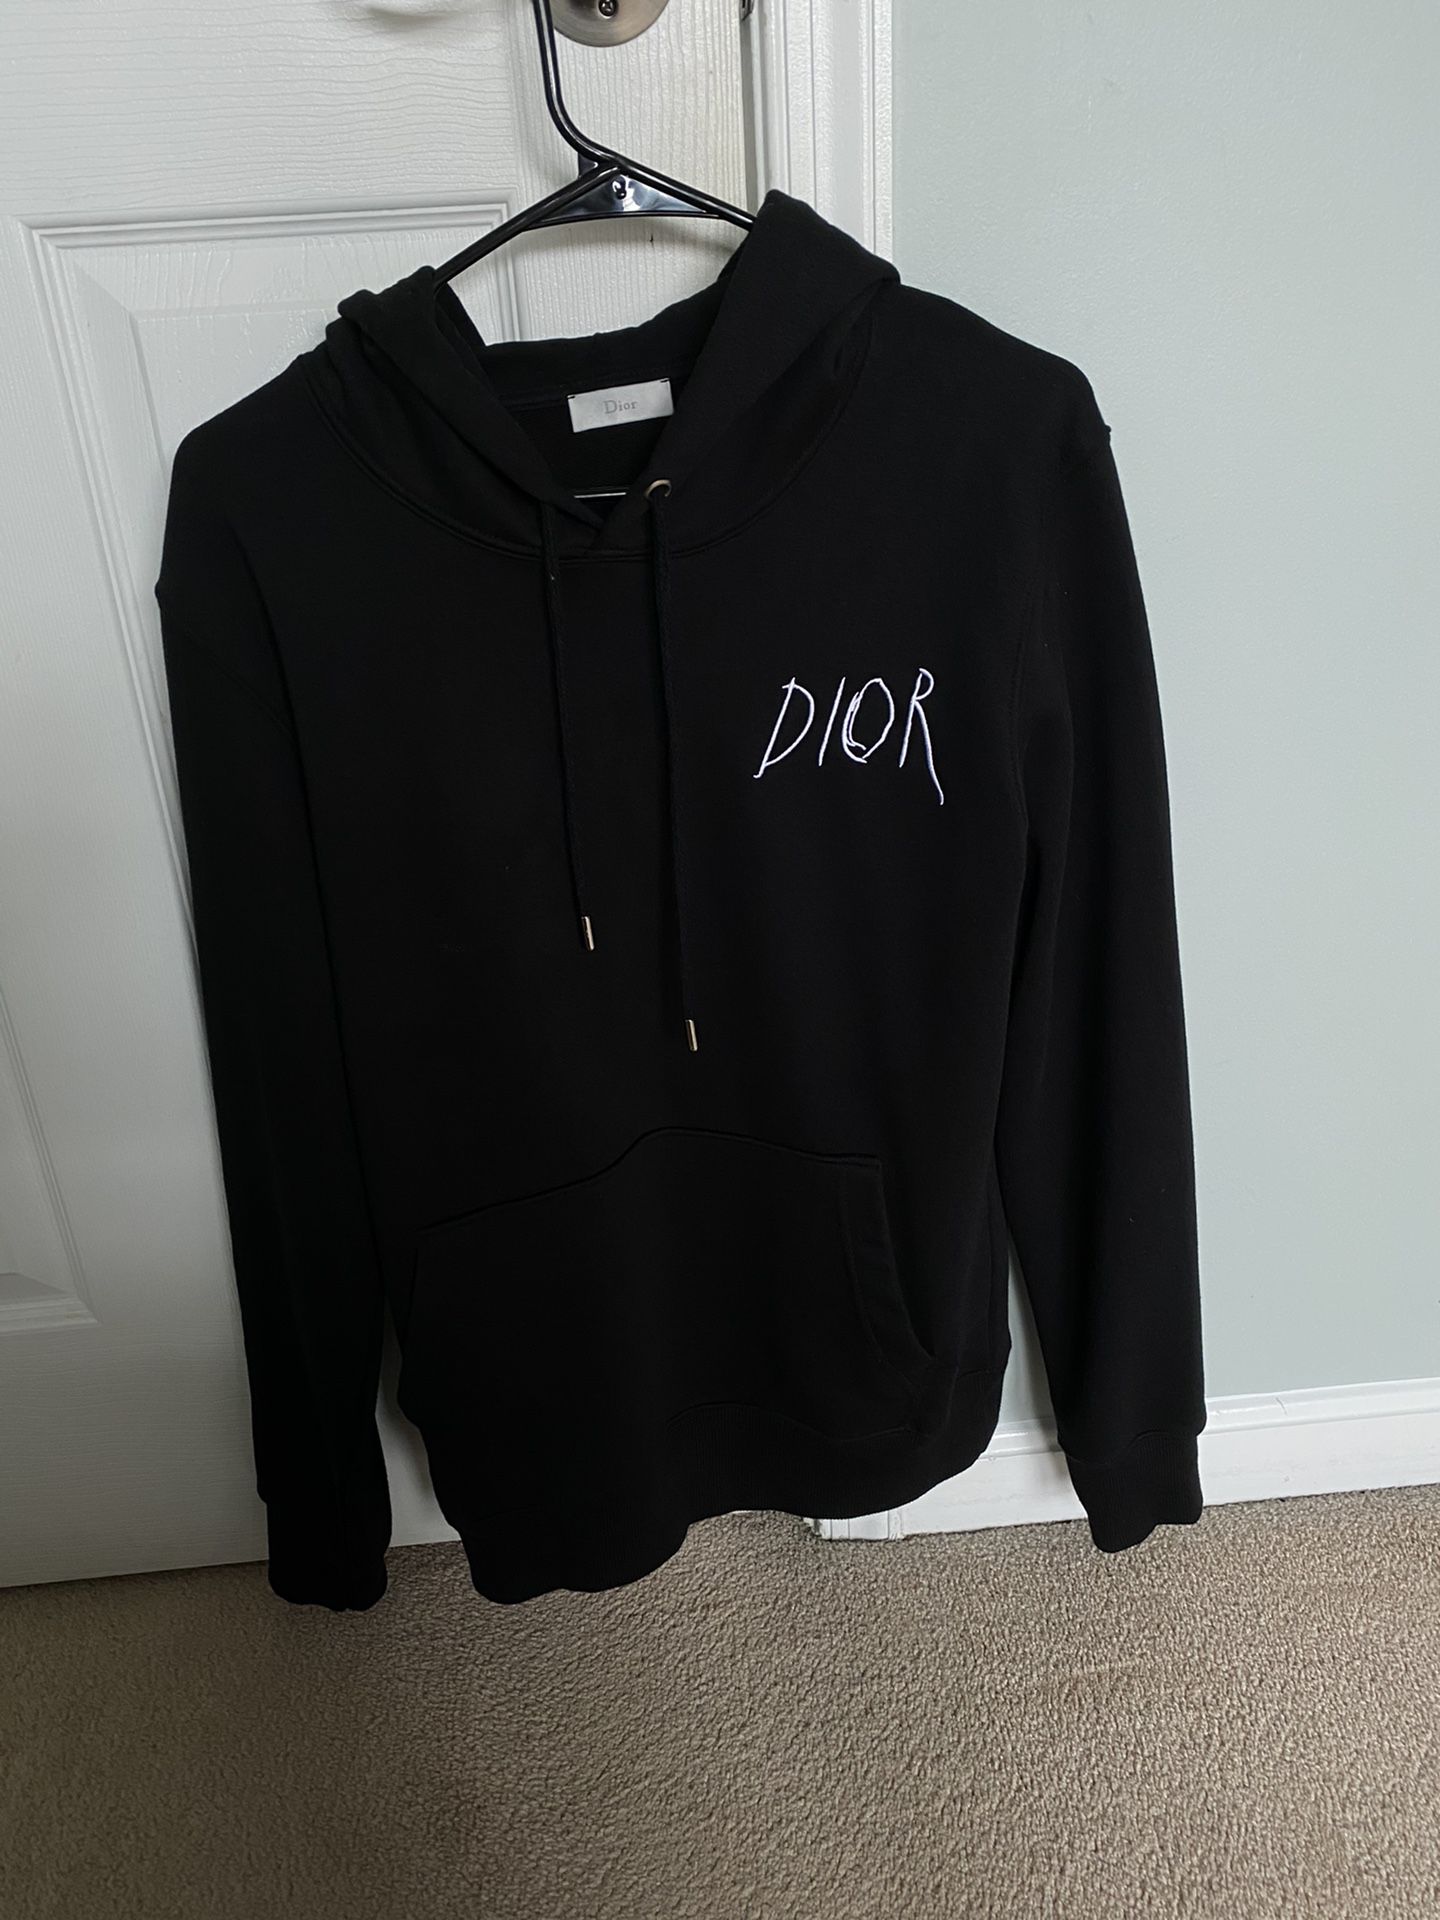 Christian Dior hoodie black